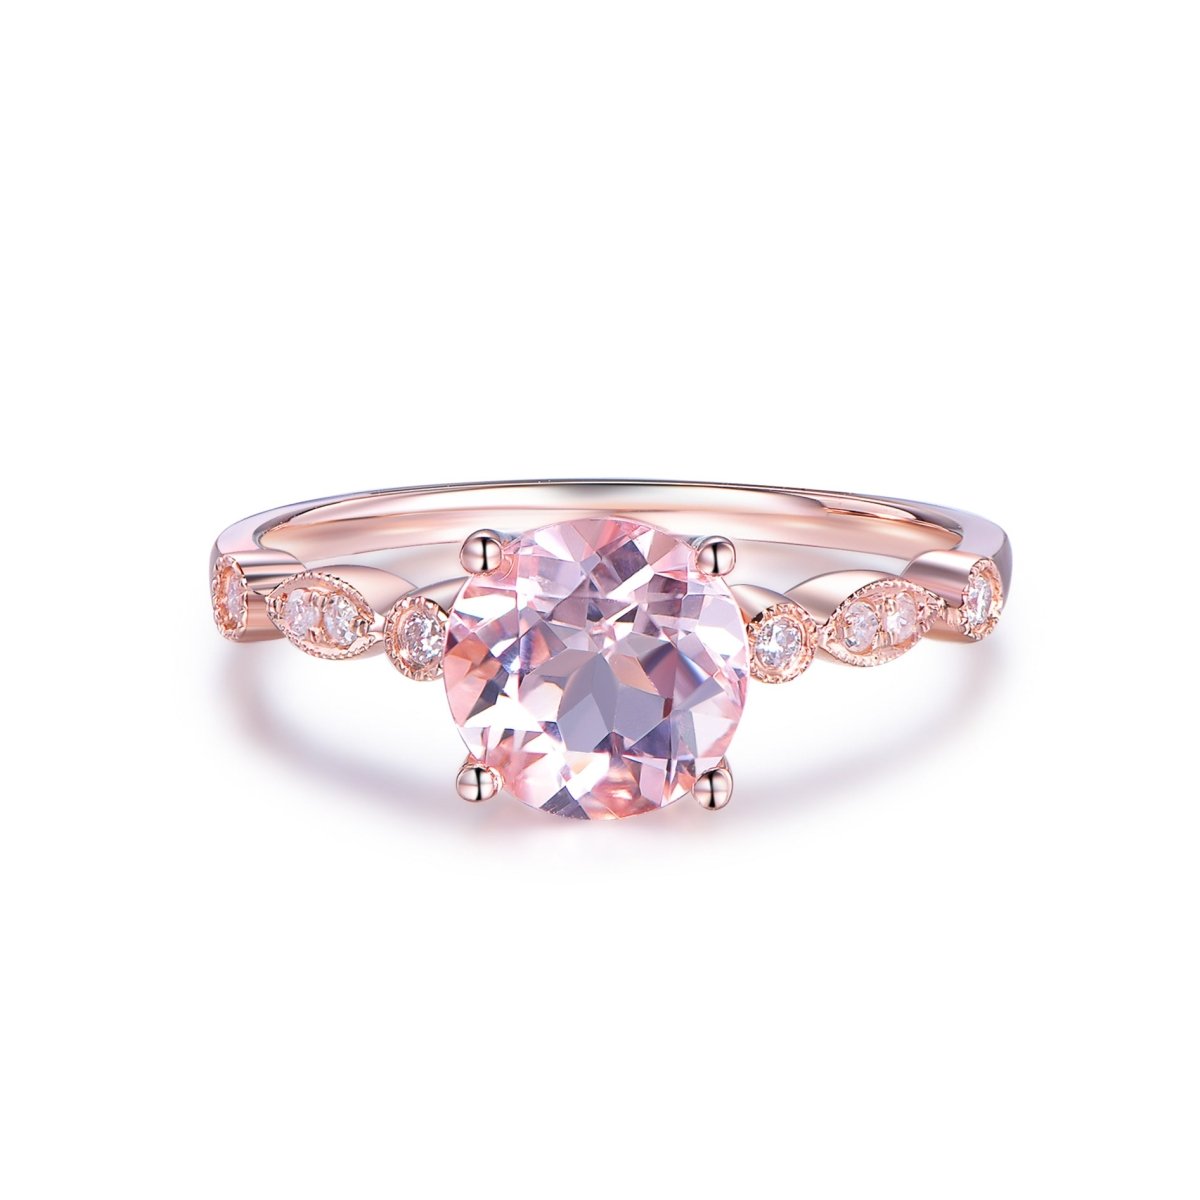 1ct Round Morganite Diamond Antique Art Deco Engagement Ring 14K Gold - Lord of Gem Rings